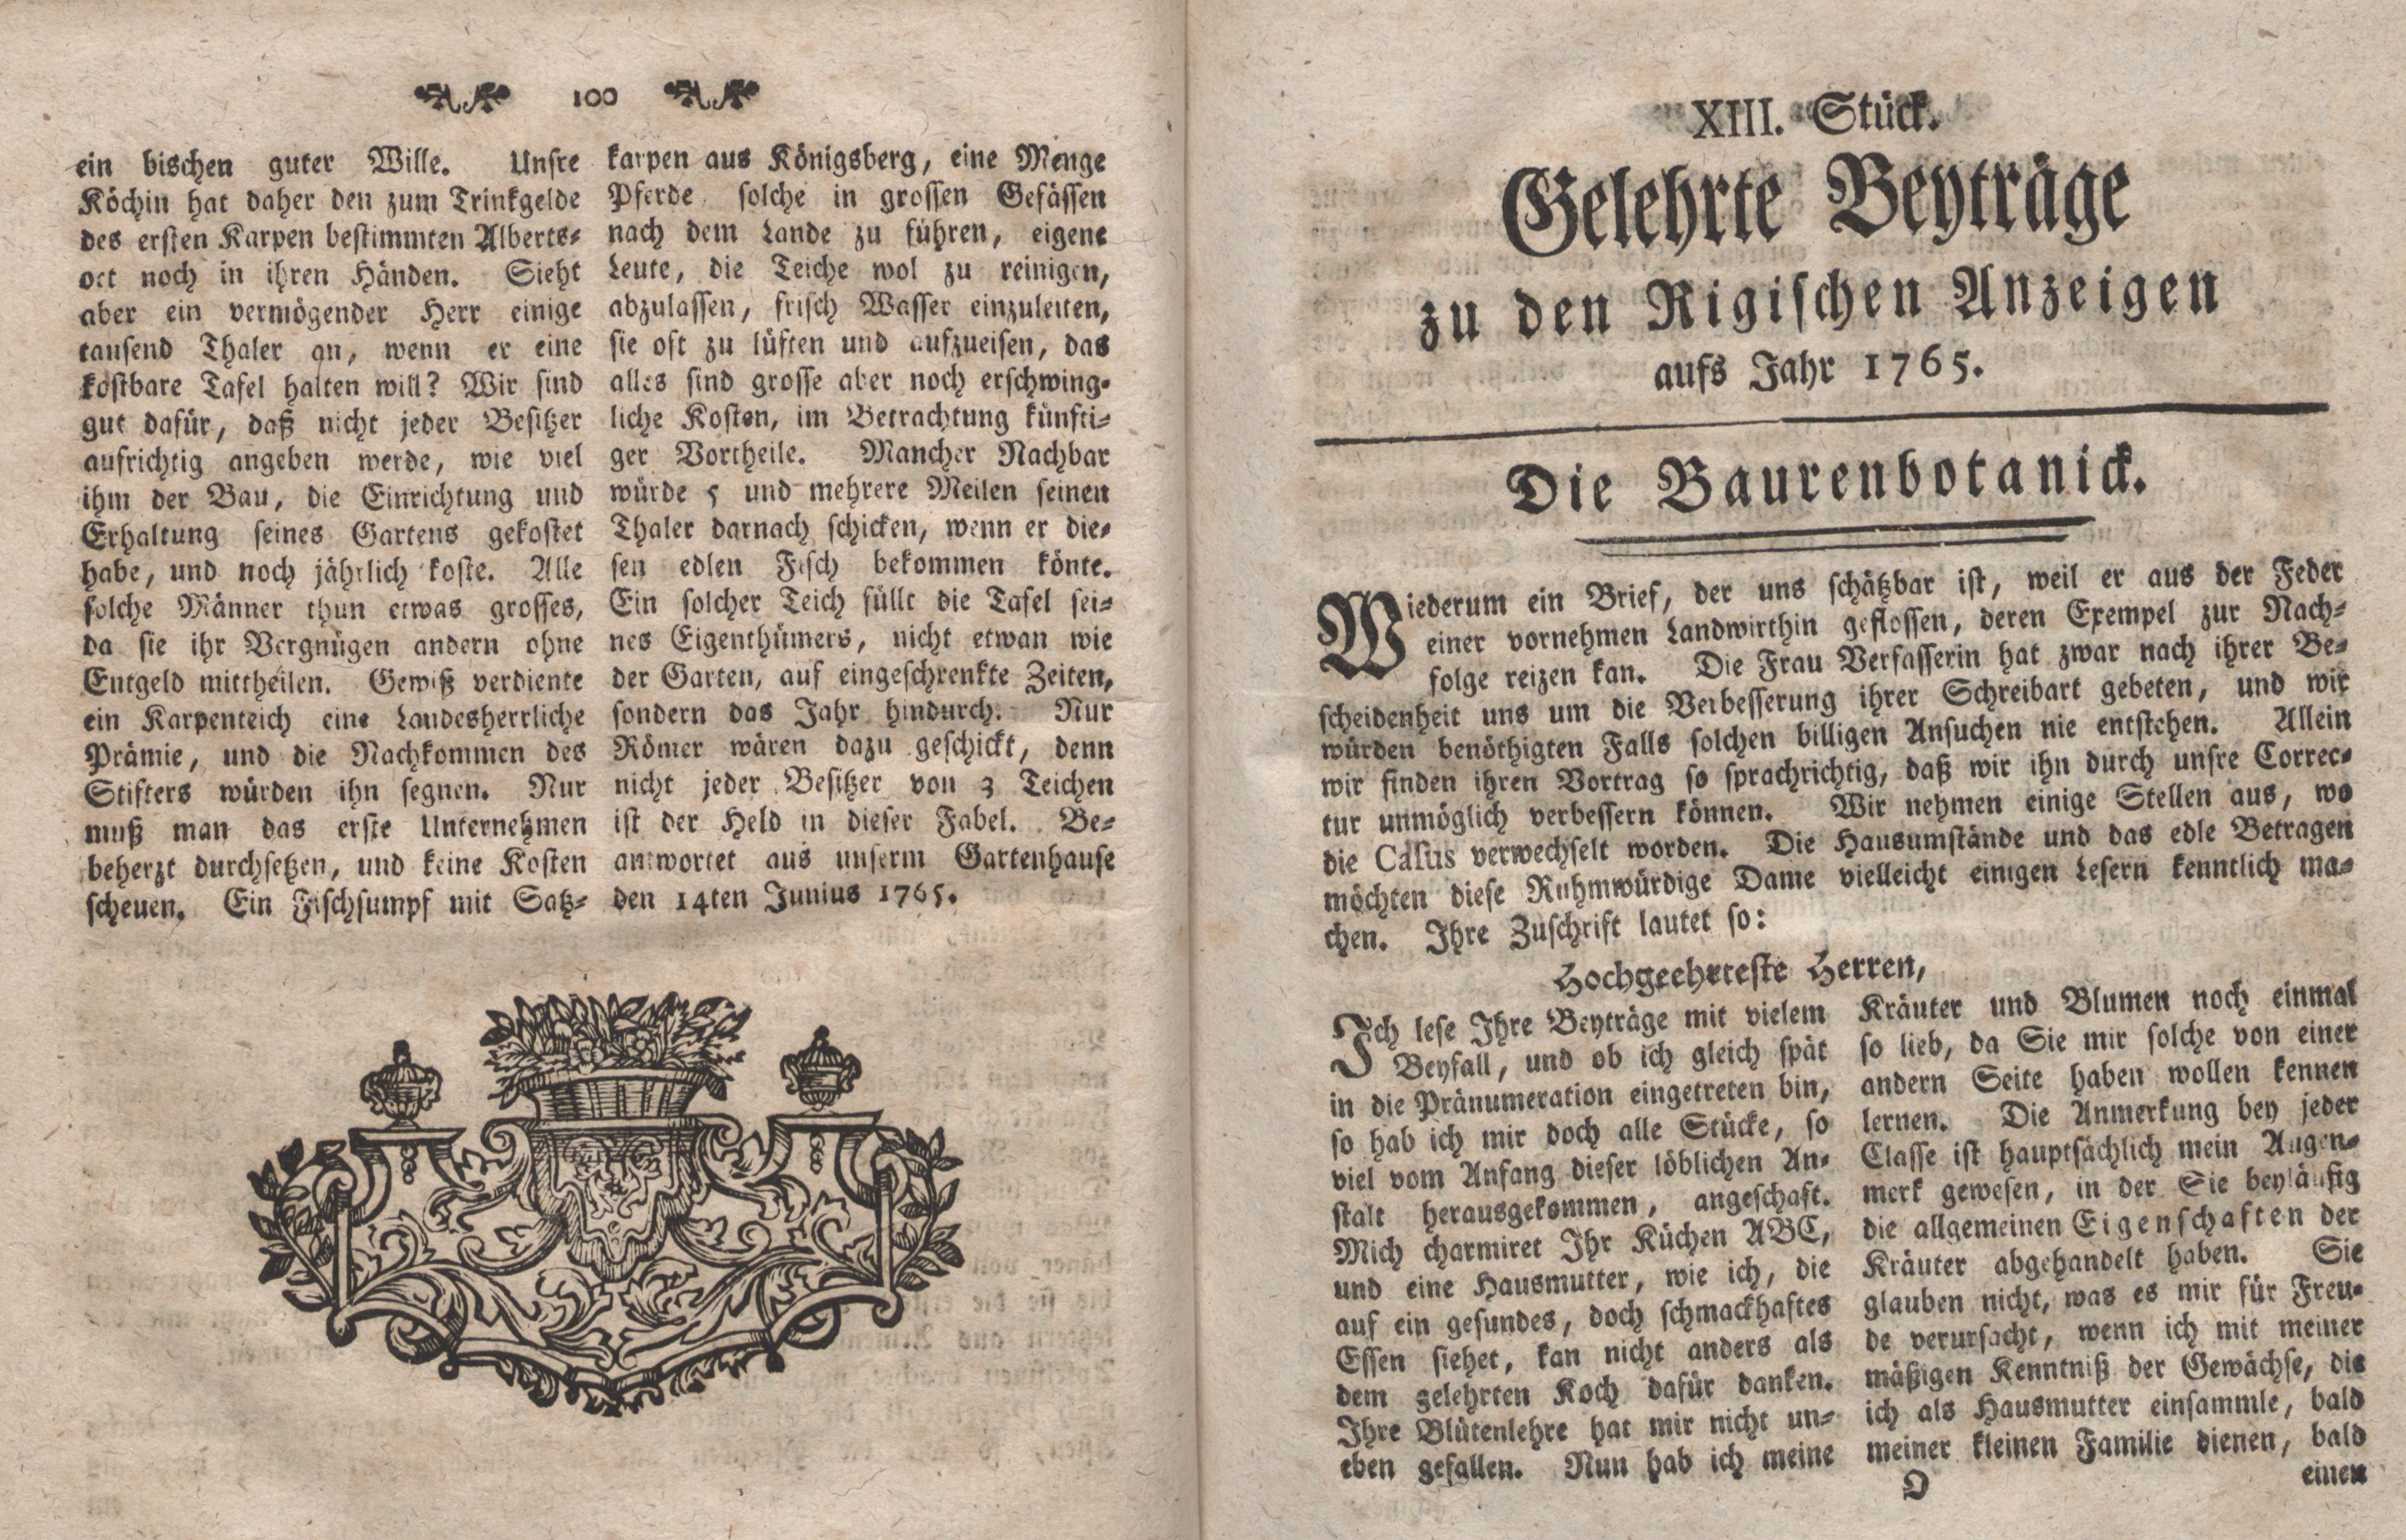 Die Baurenbotanick [1] (1765) | 1. (100-101) Main body of text